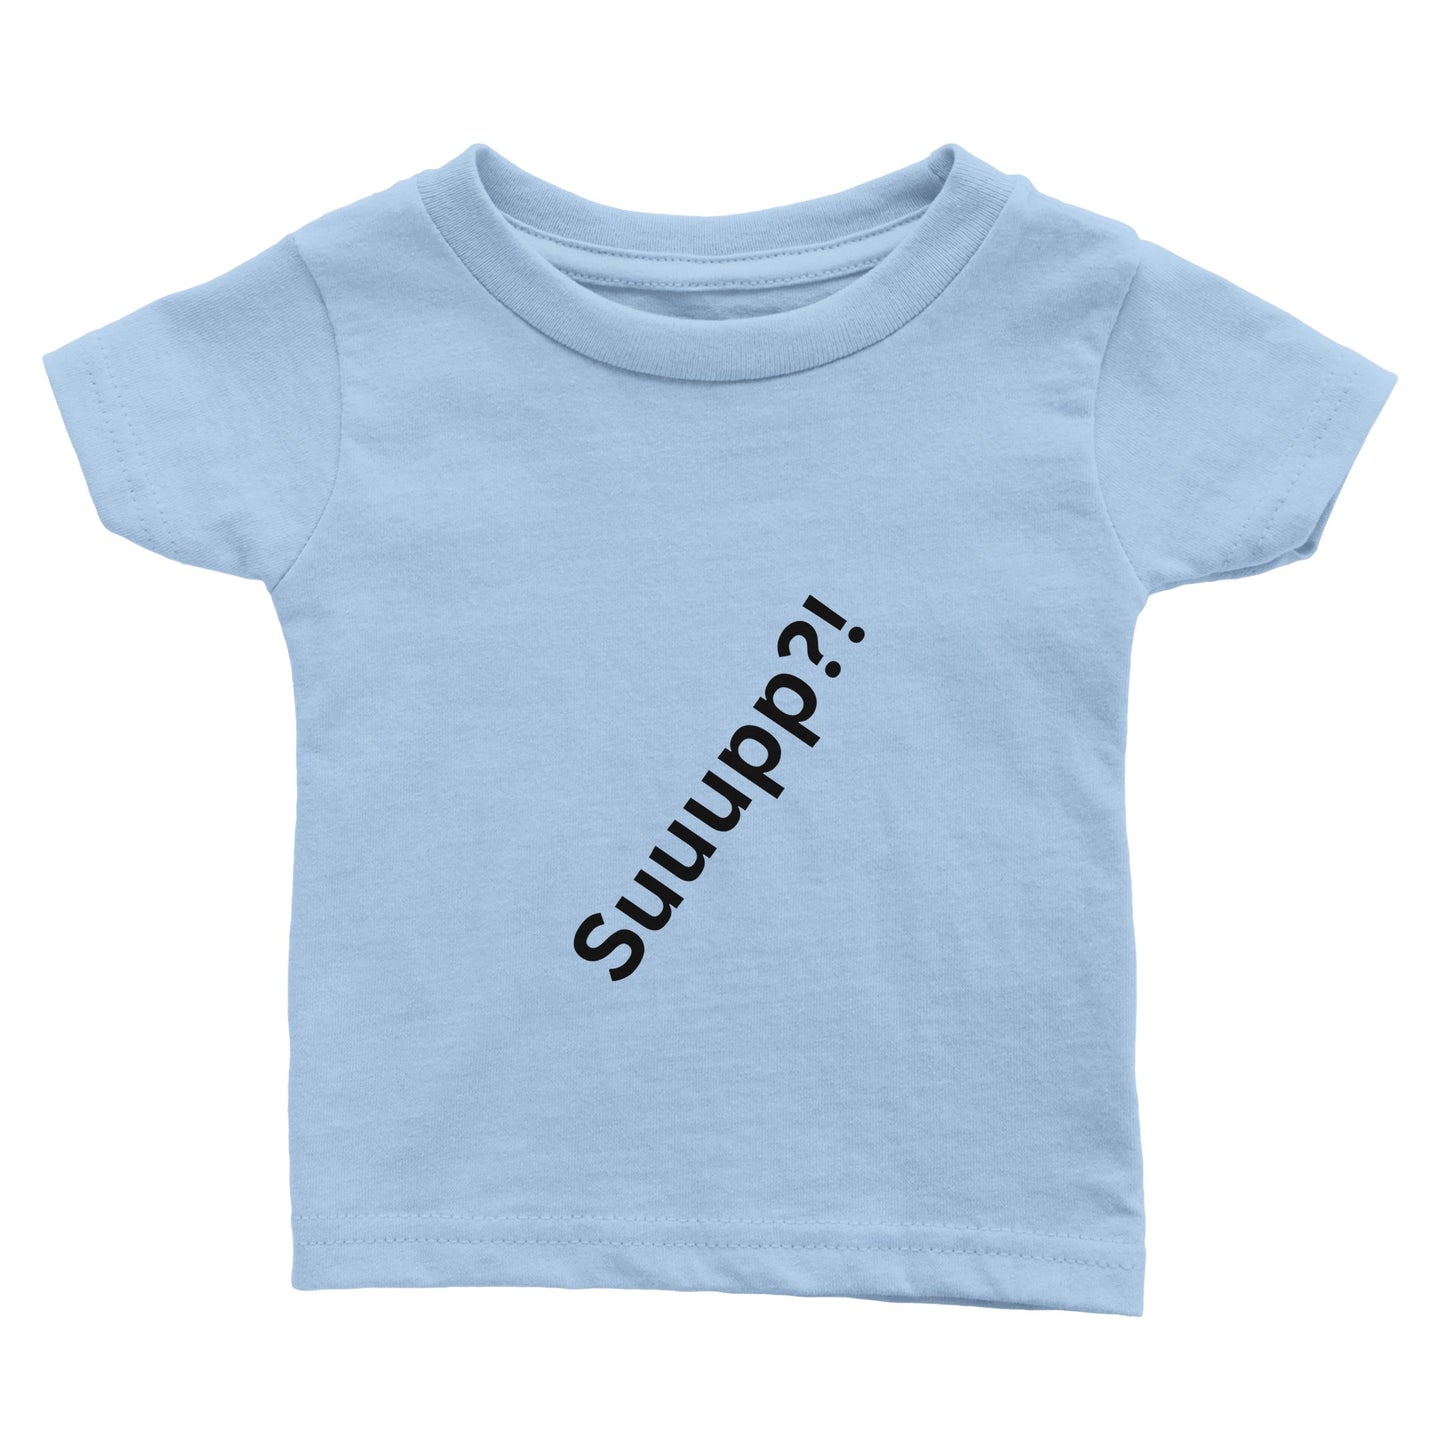 Suuppp?! Childrens Clothing